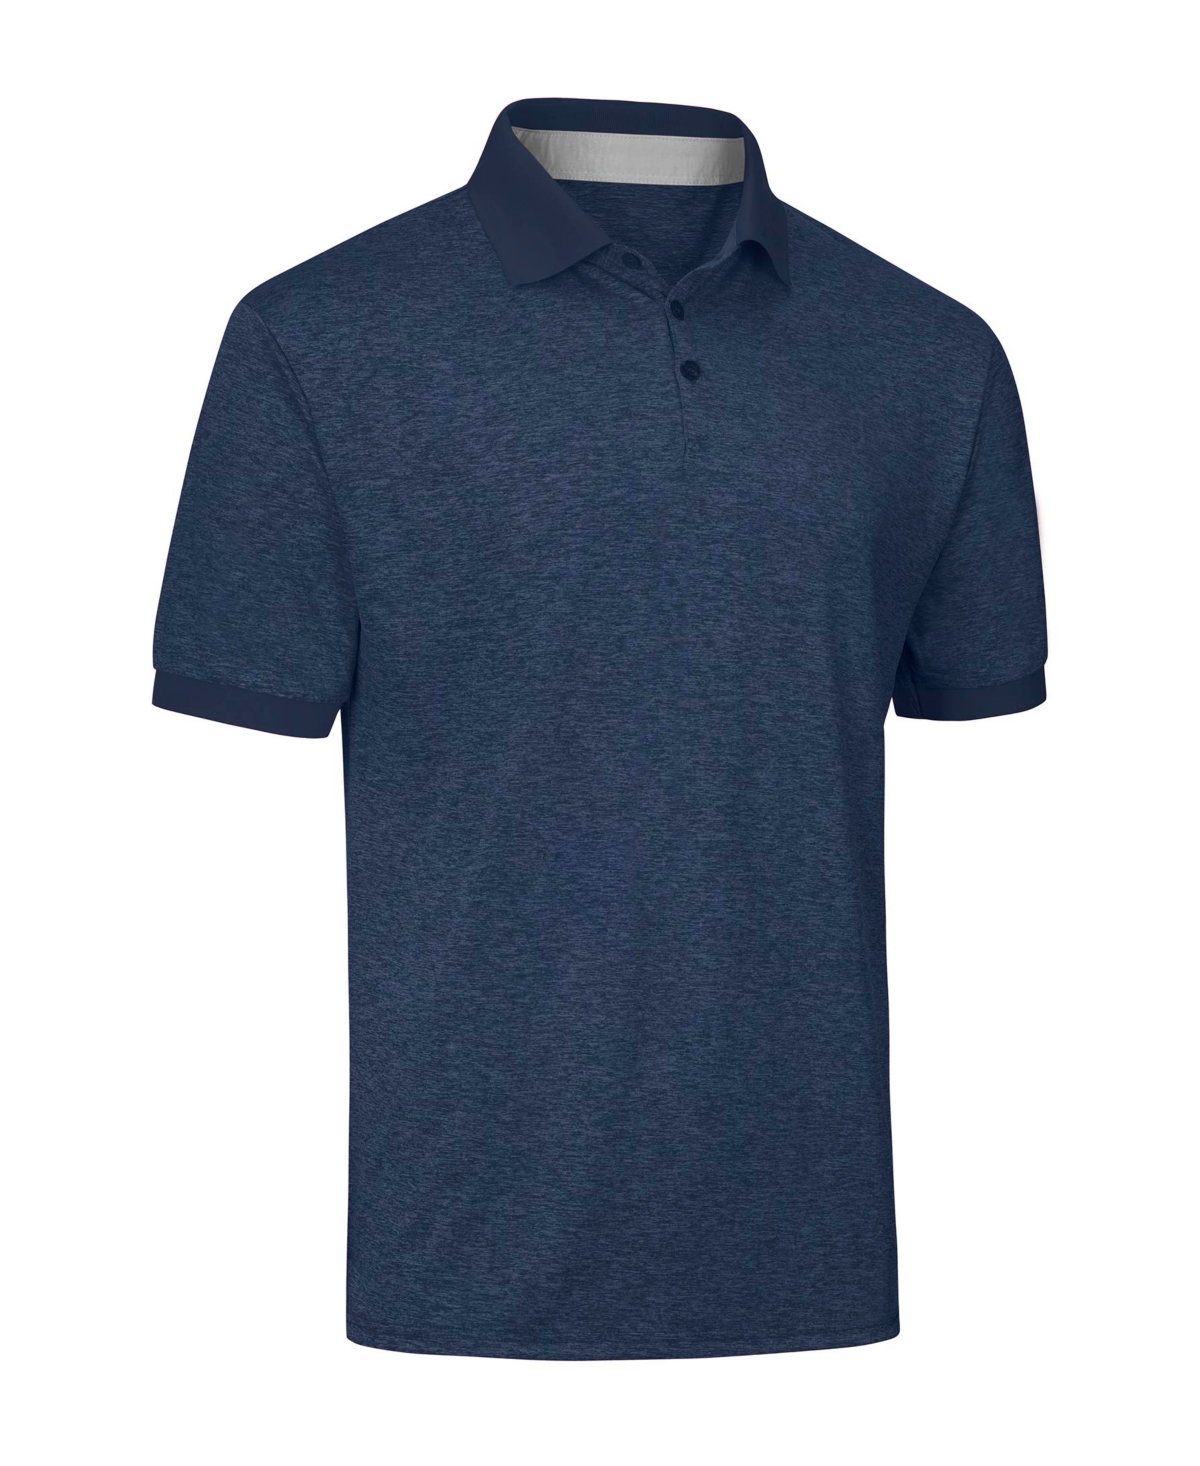 Men's Designer Golf Polo Shirt, Plus Size - Sky blue